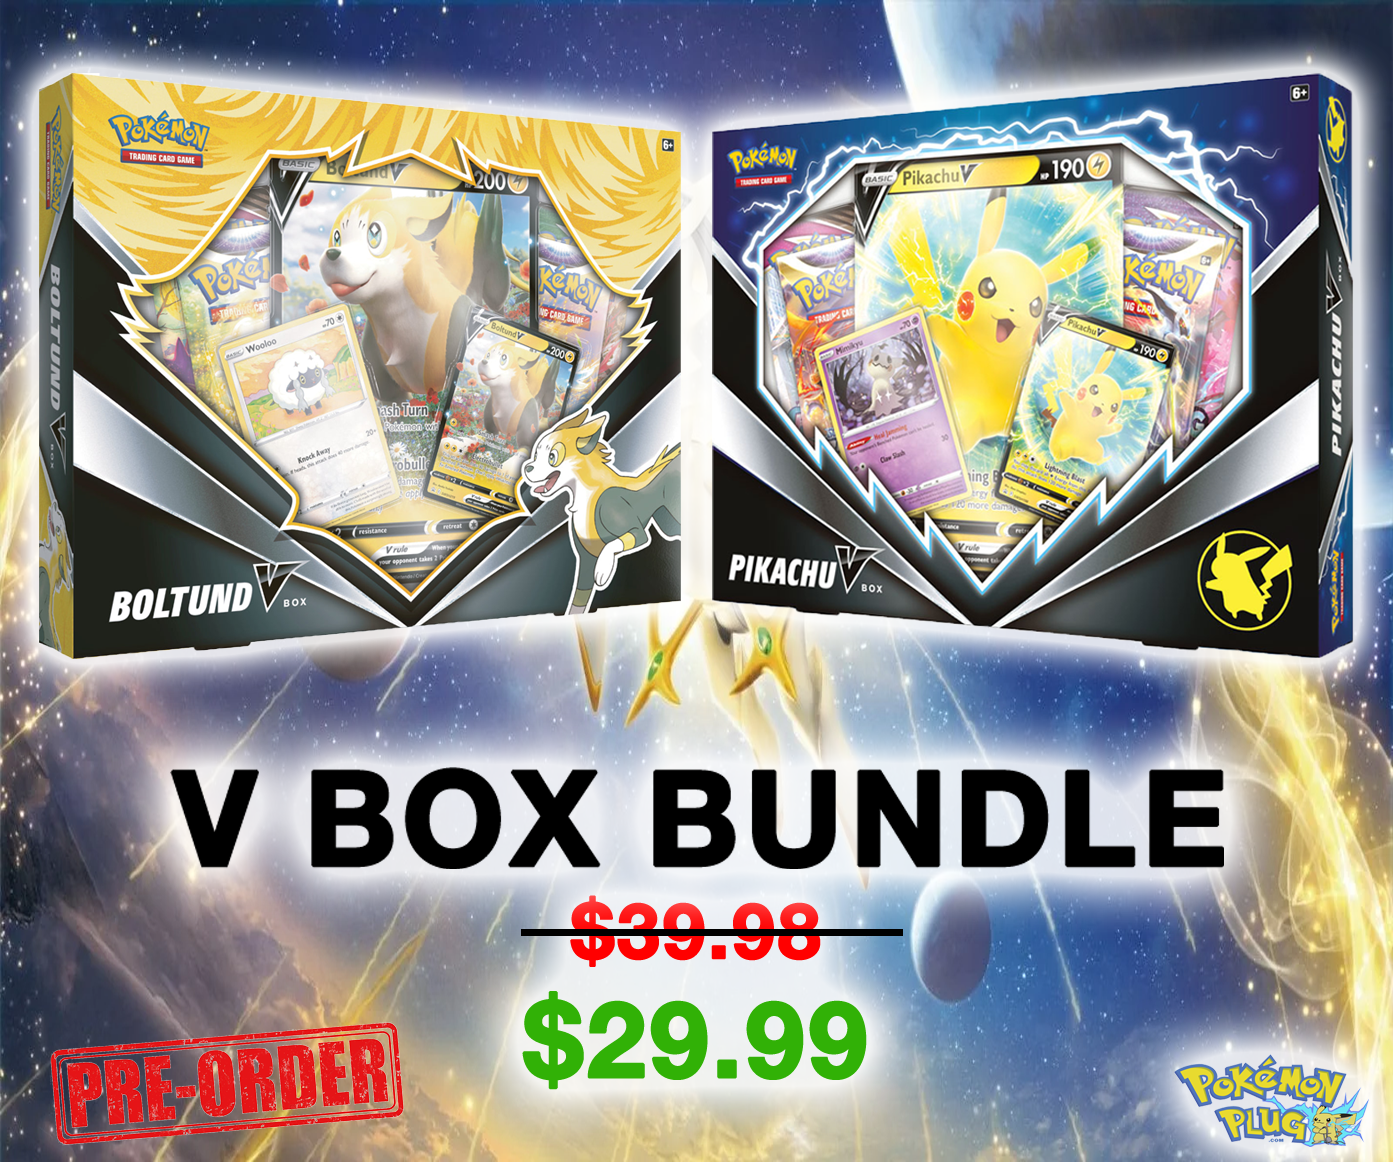 Pikachu V + Boltund V Box BUNDLE